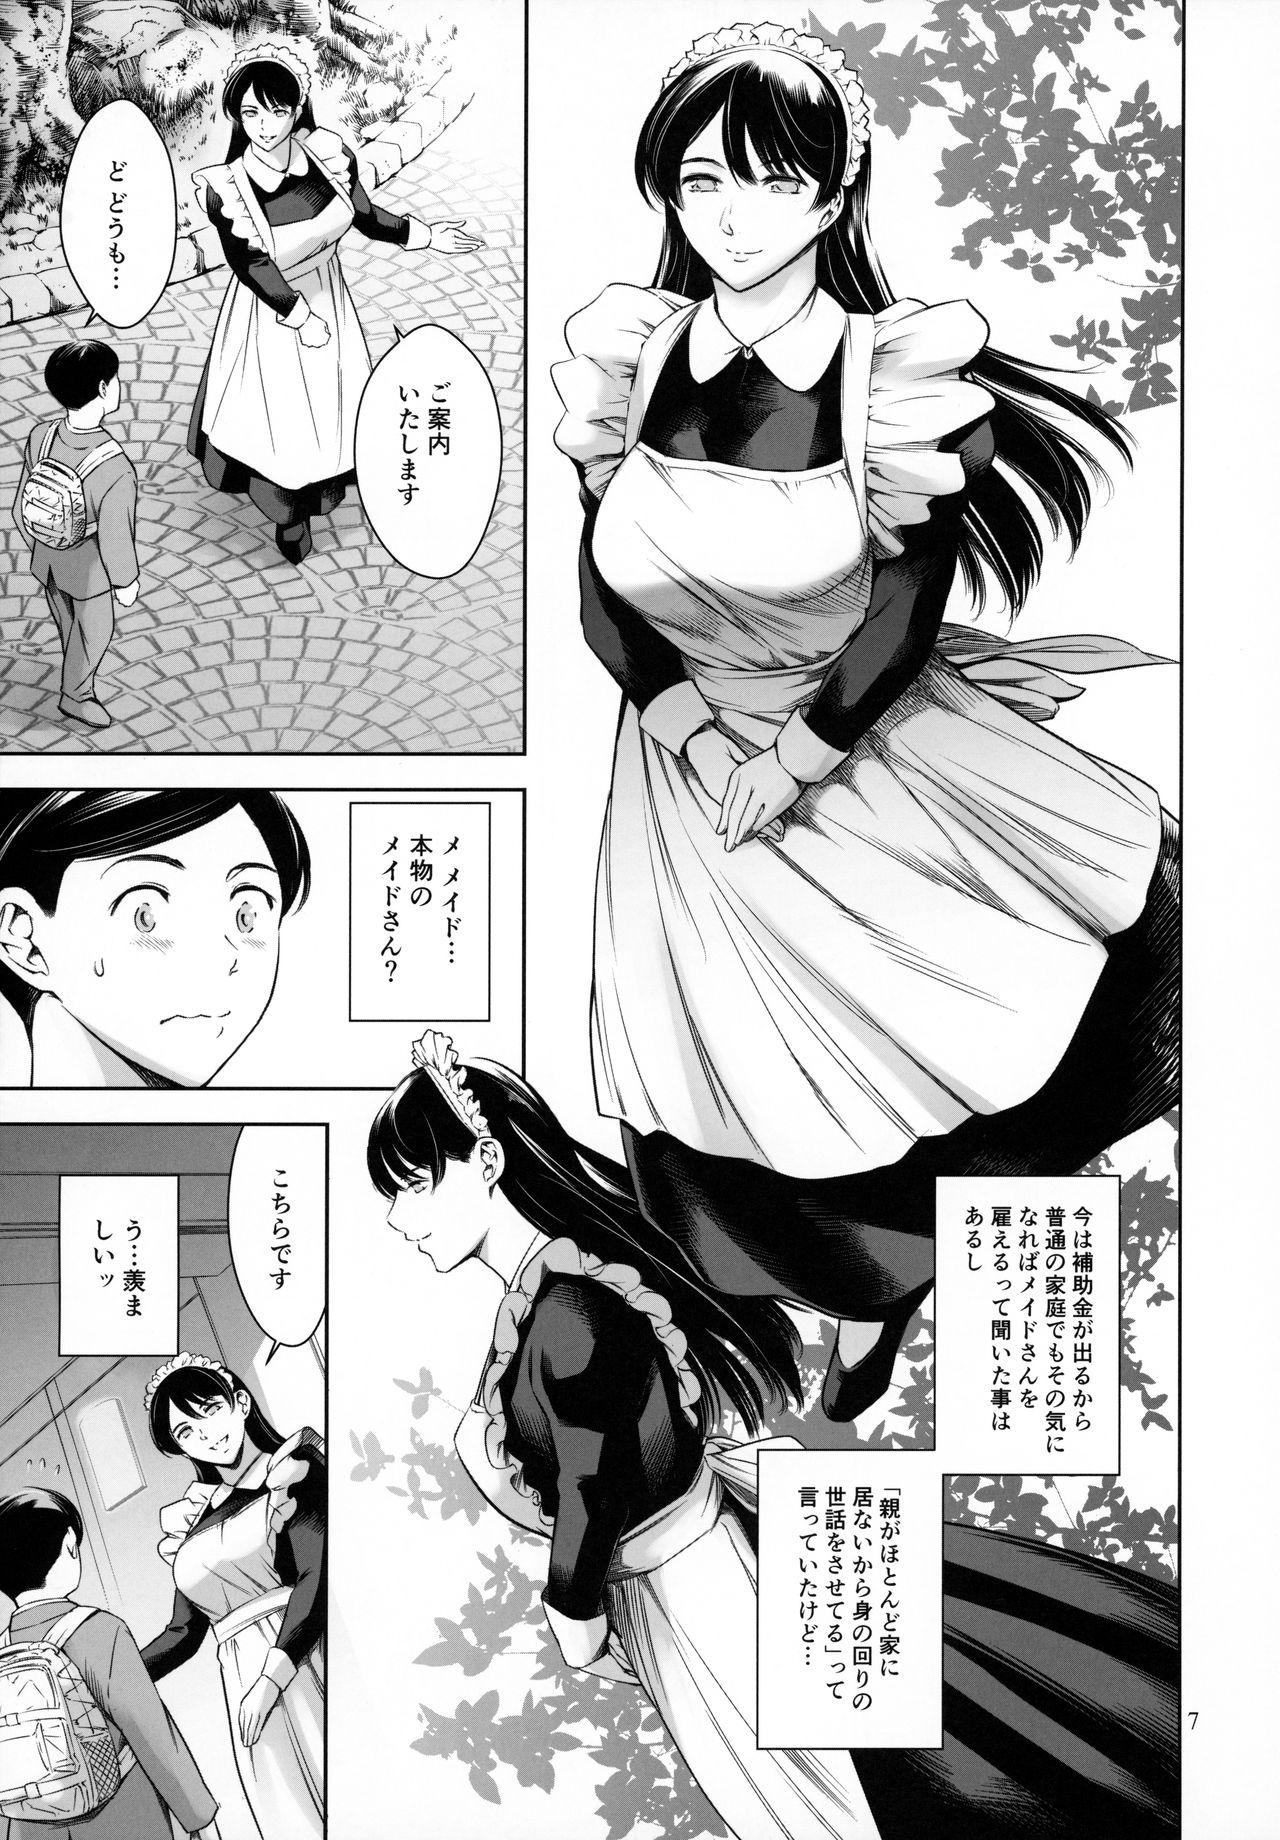 Rubbing Uchi no Maid - Original Work - Page 6